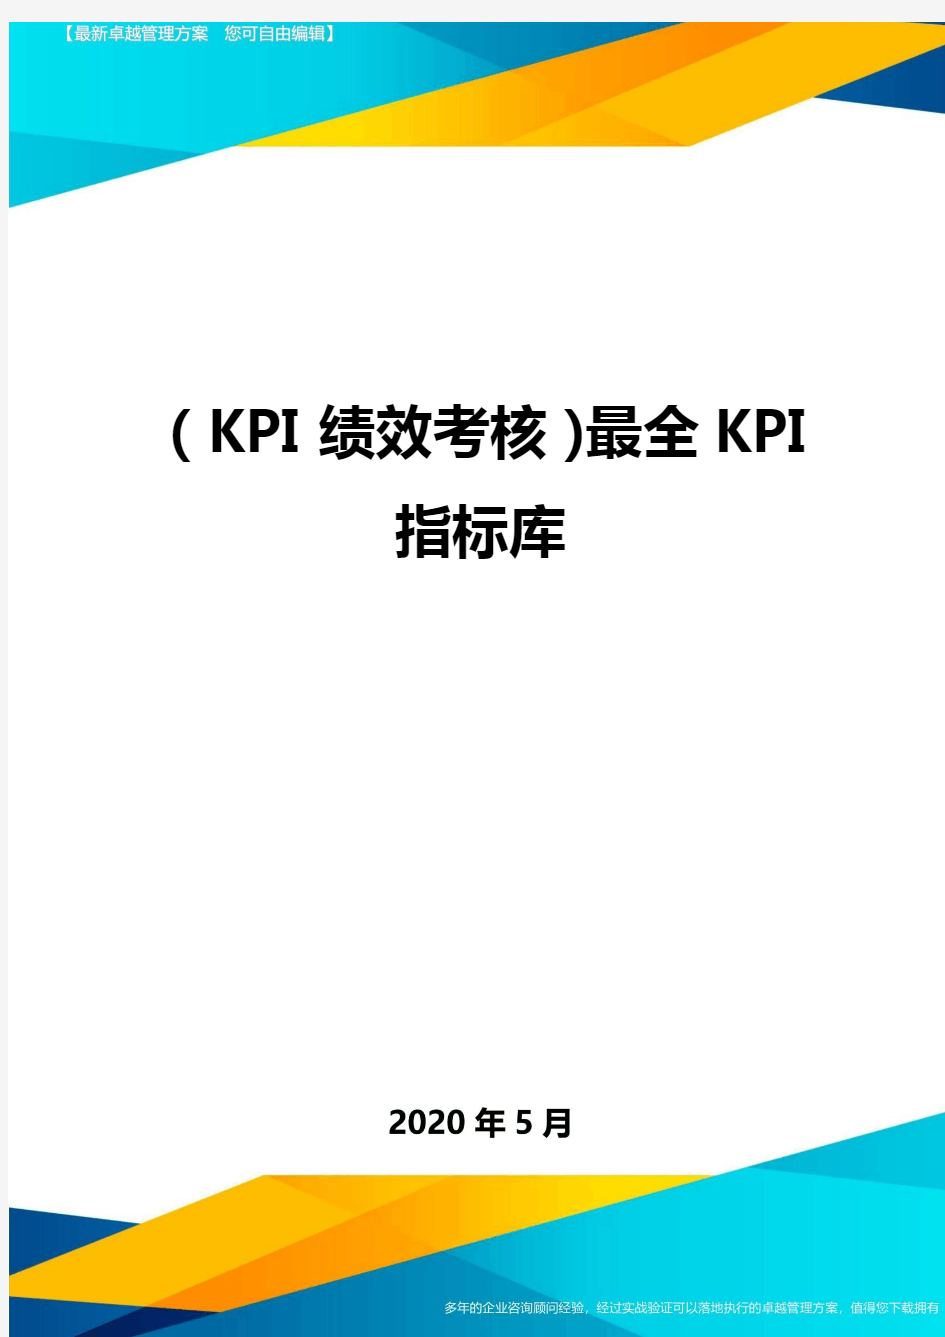 ( KPI绩效考核)最全KPI指标库